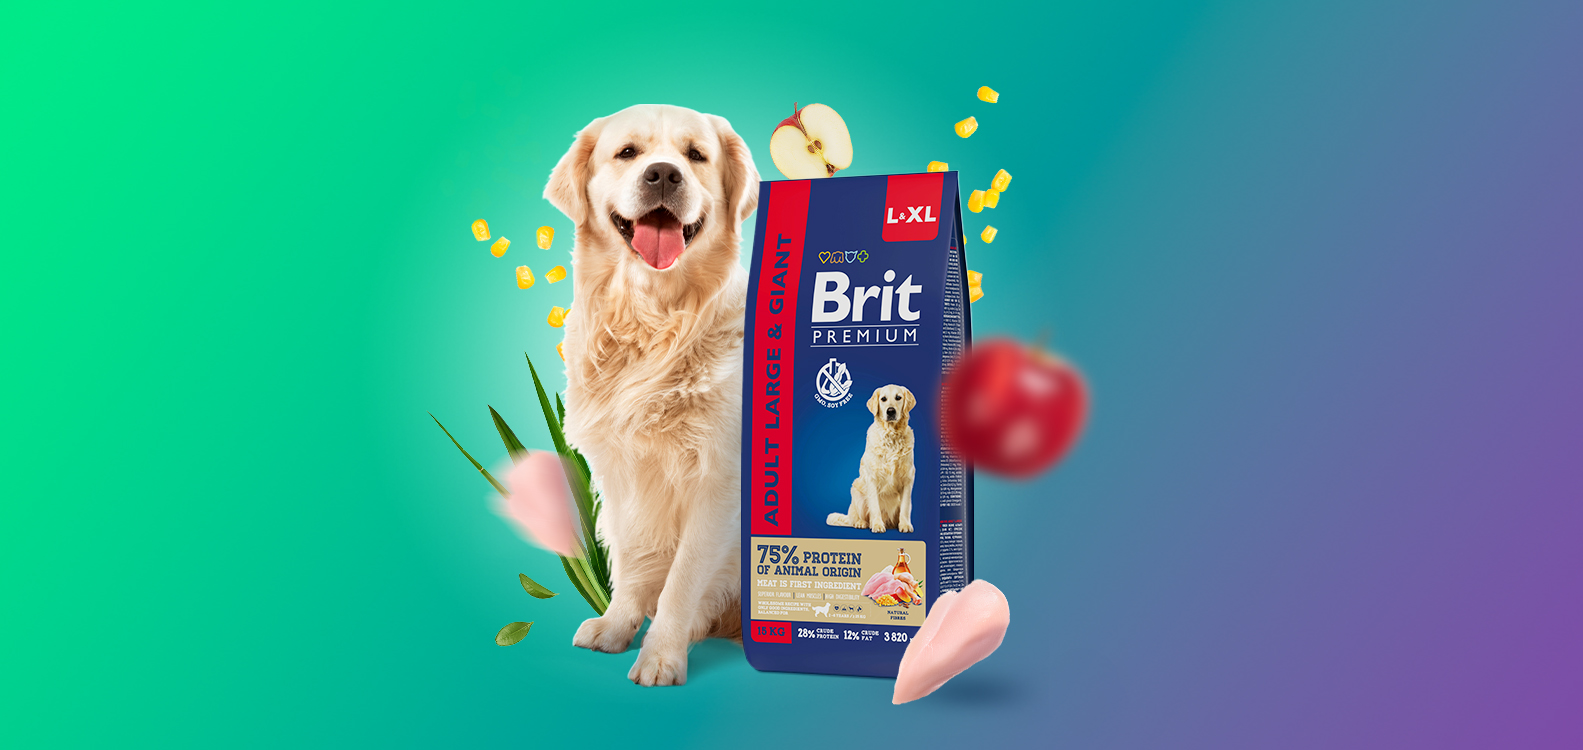 СБЕР МЕГАМАРКЕТ: Скидка 25% на сухой корм для собак Brit Premium